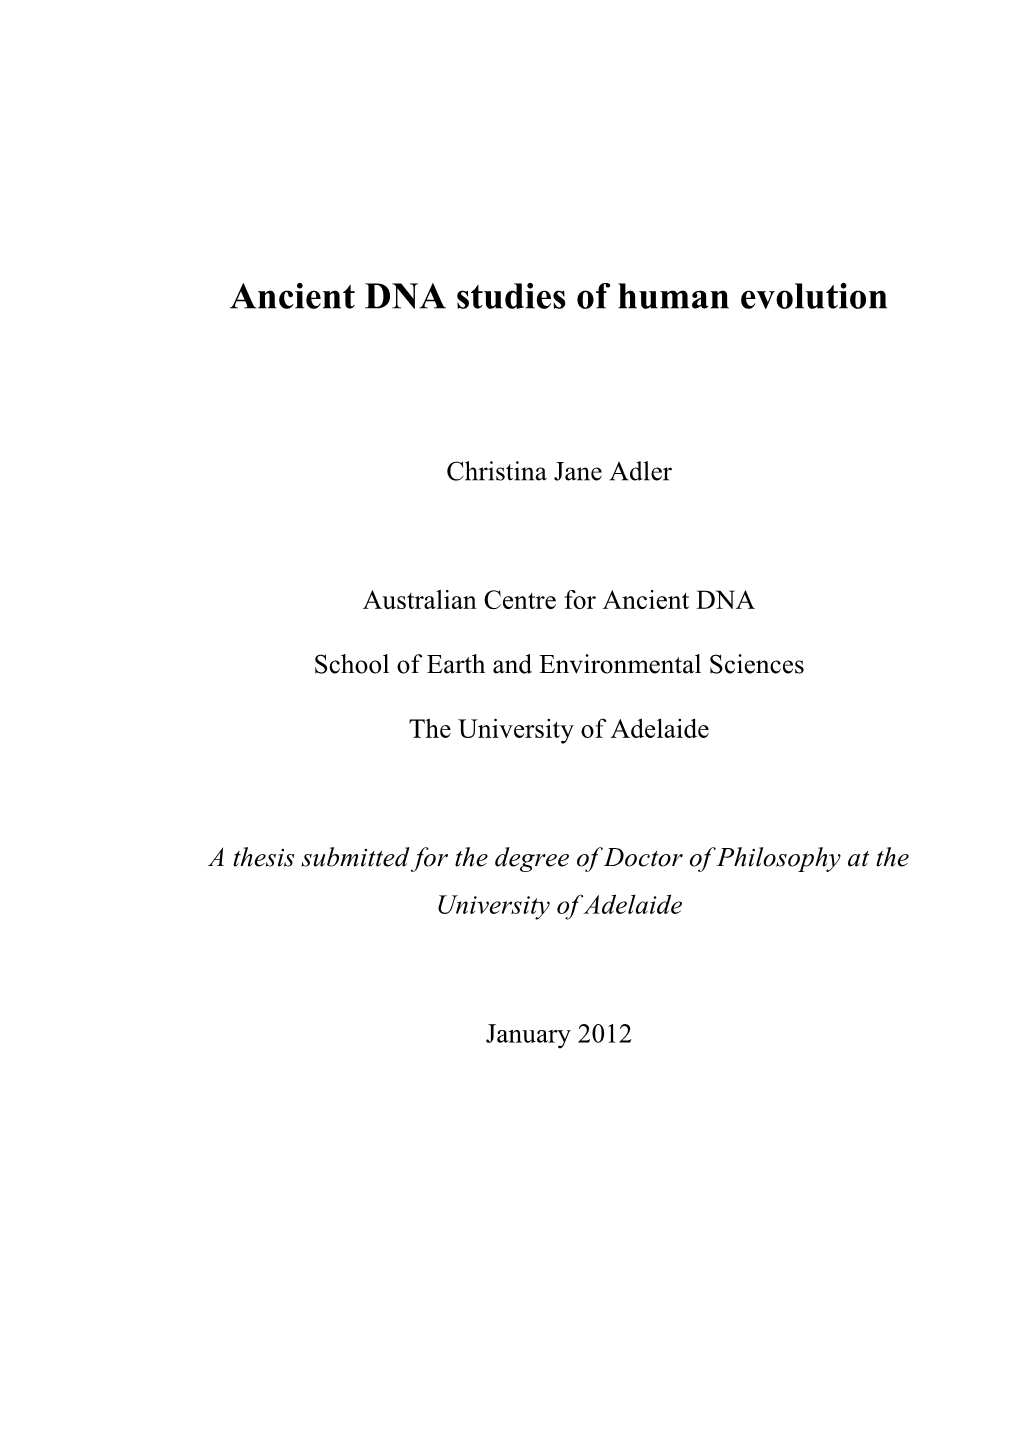 Ancient DNA Studies of Human Evolution